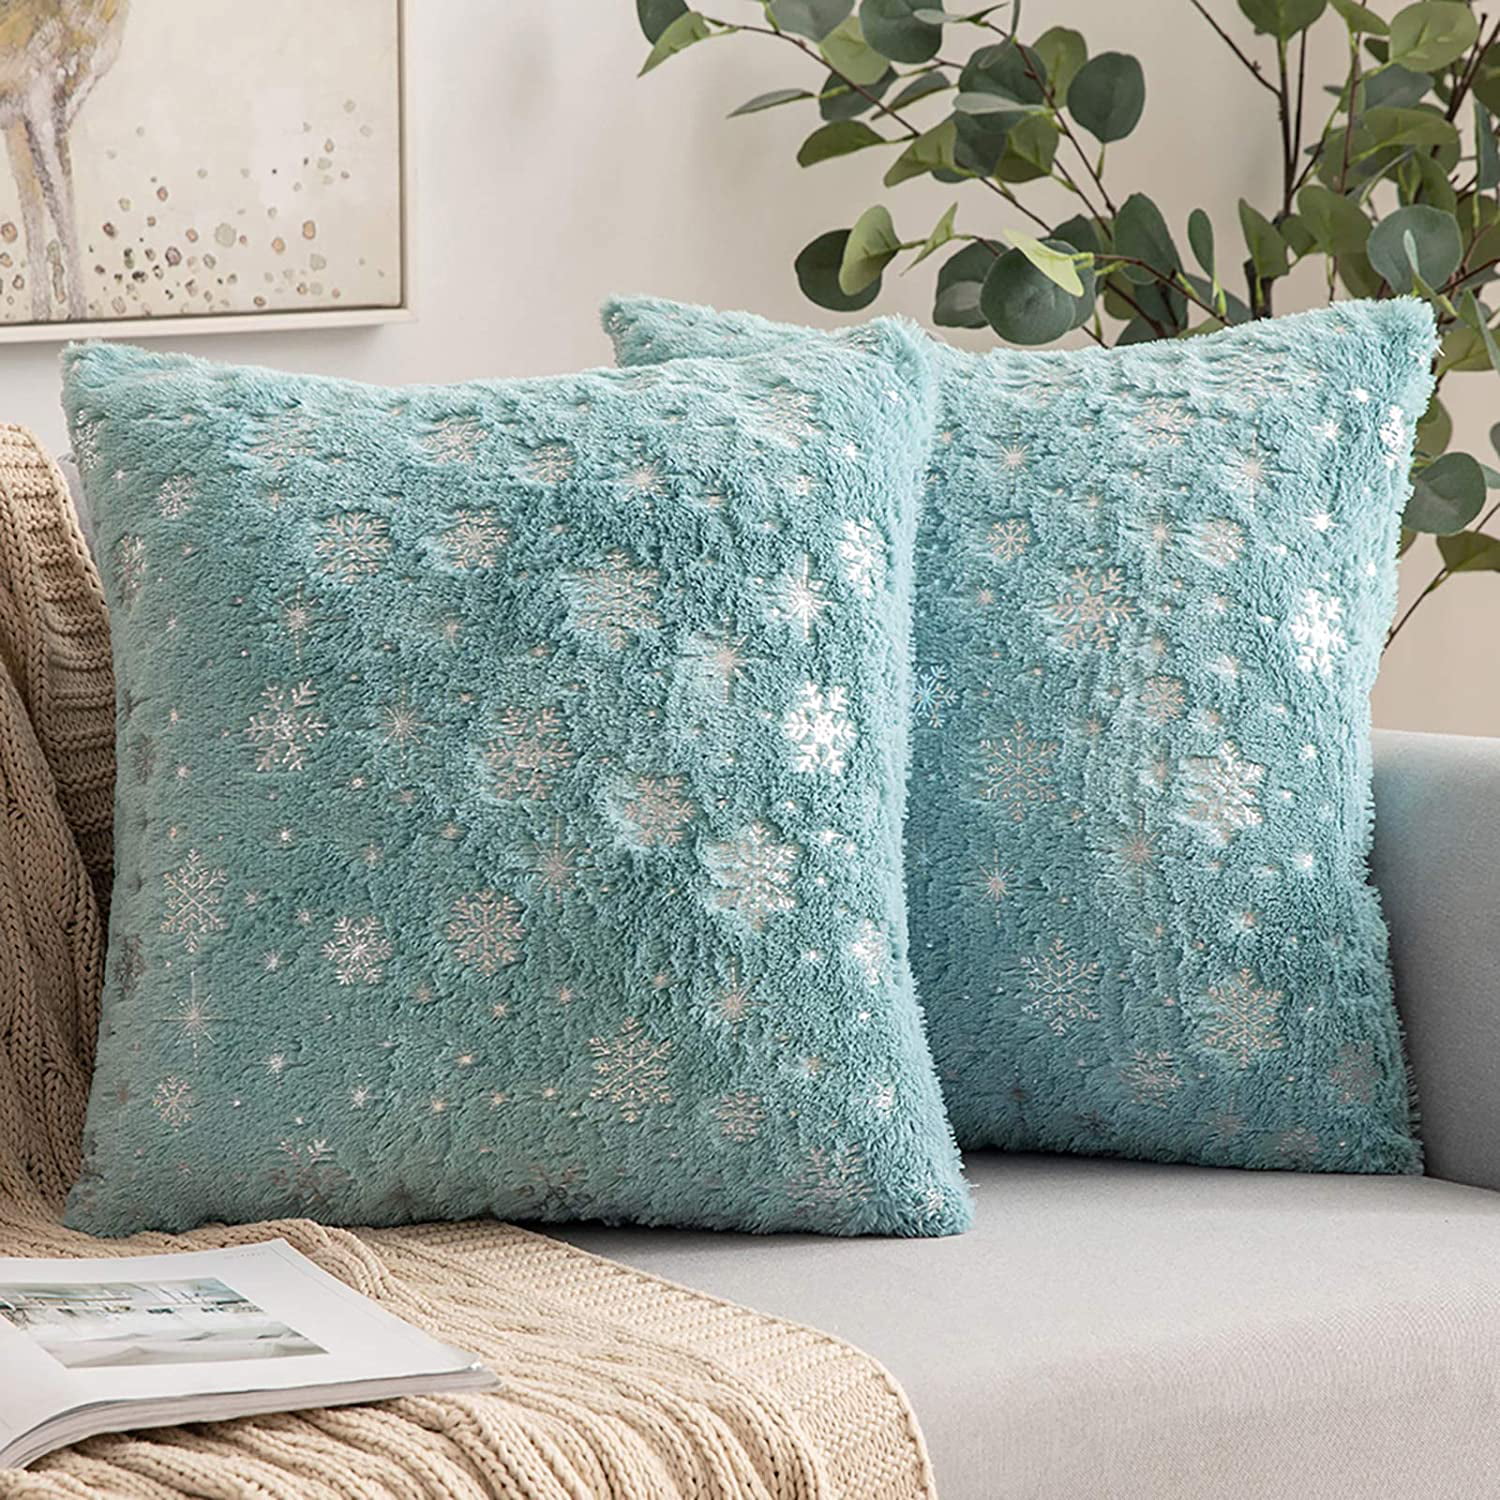 2 Pcs Solid Color Corduroy Decorativeo Pillowcase Cushion Cver for Sofa Throw Pillow Case 18 X 18 Inch 45 X 45 cm Queenie® 18 X 18 Inch, Pink